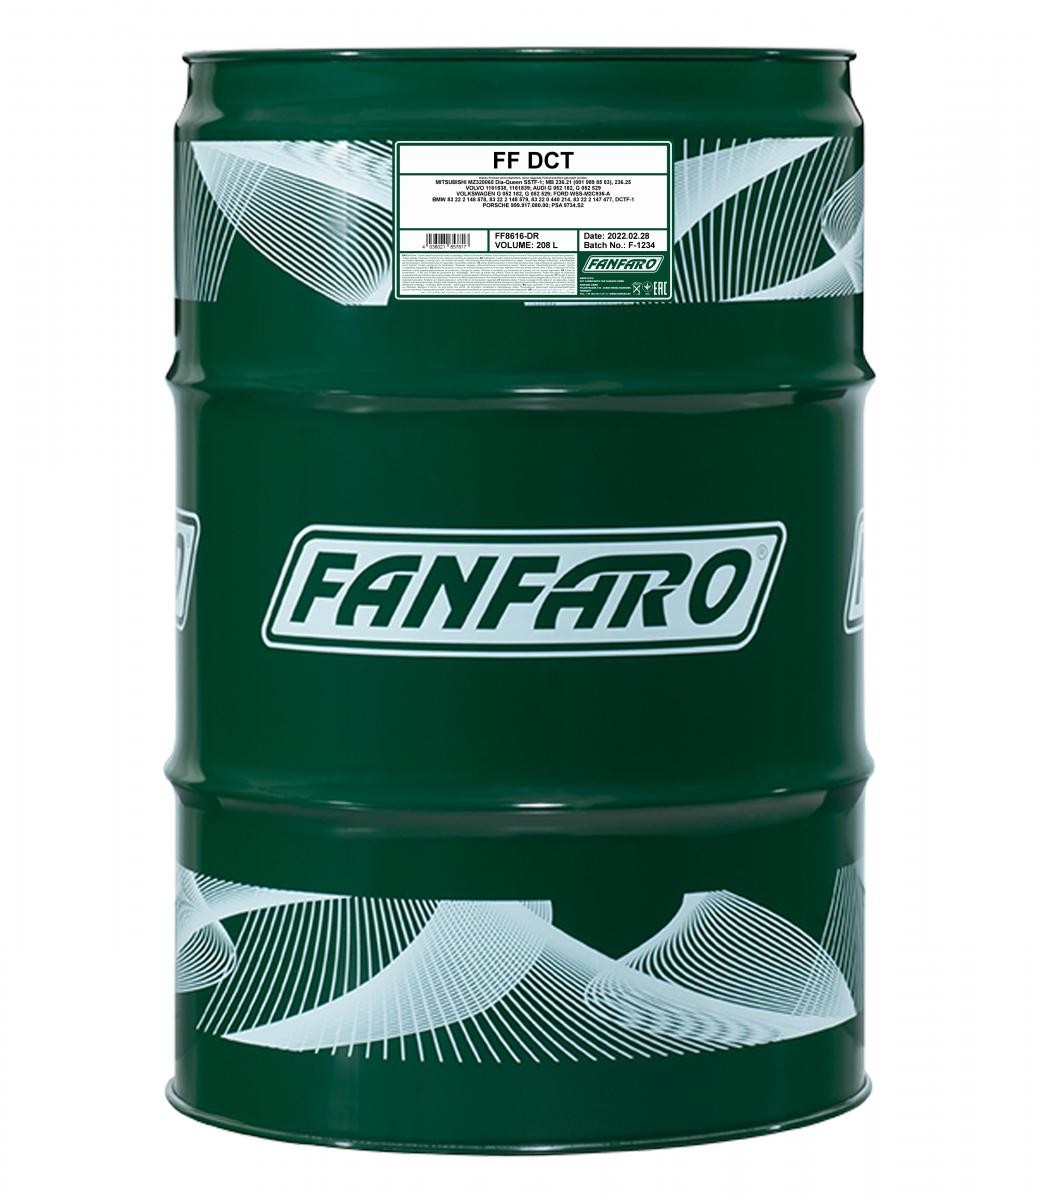 Original FANFARO Gear oil FF8616-DR for FORD KUGA